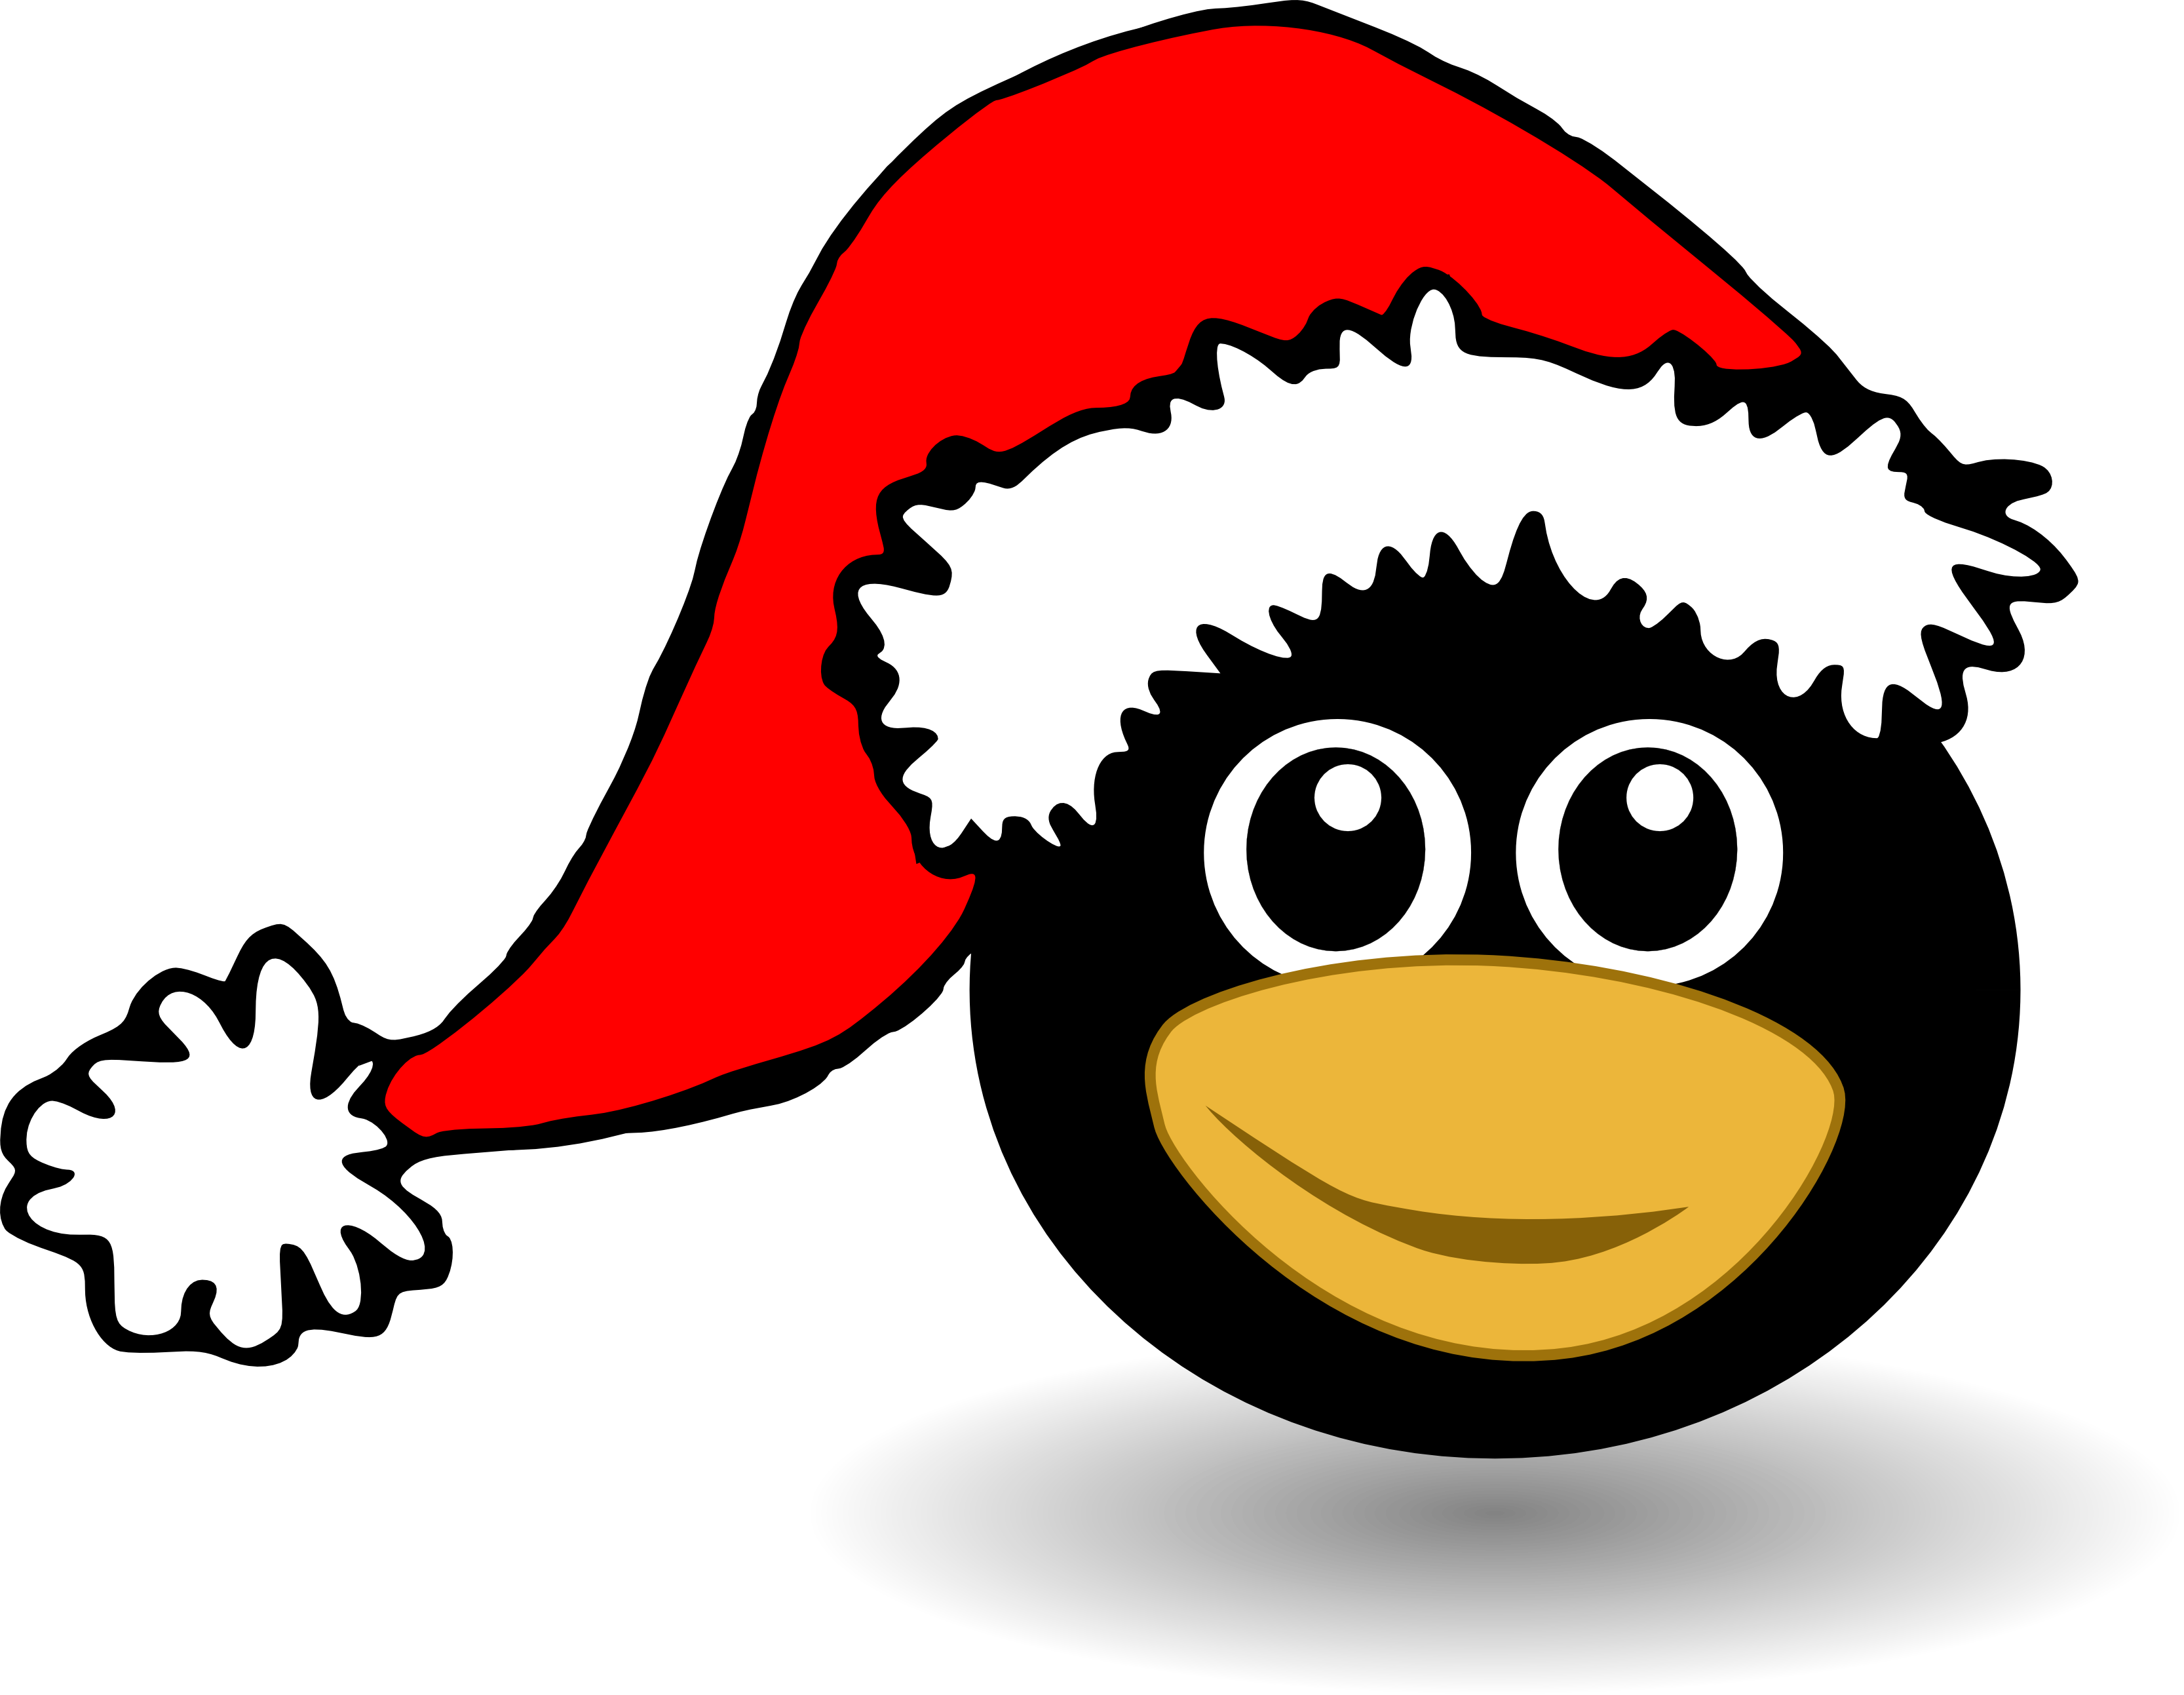 Christmas Penguin Clipart Black And White | Clipart Panda - Free ...